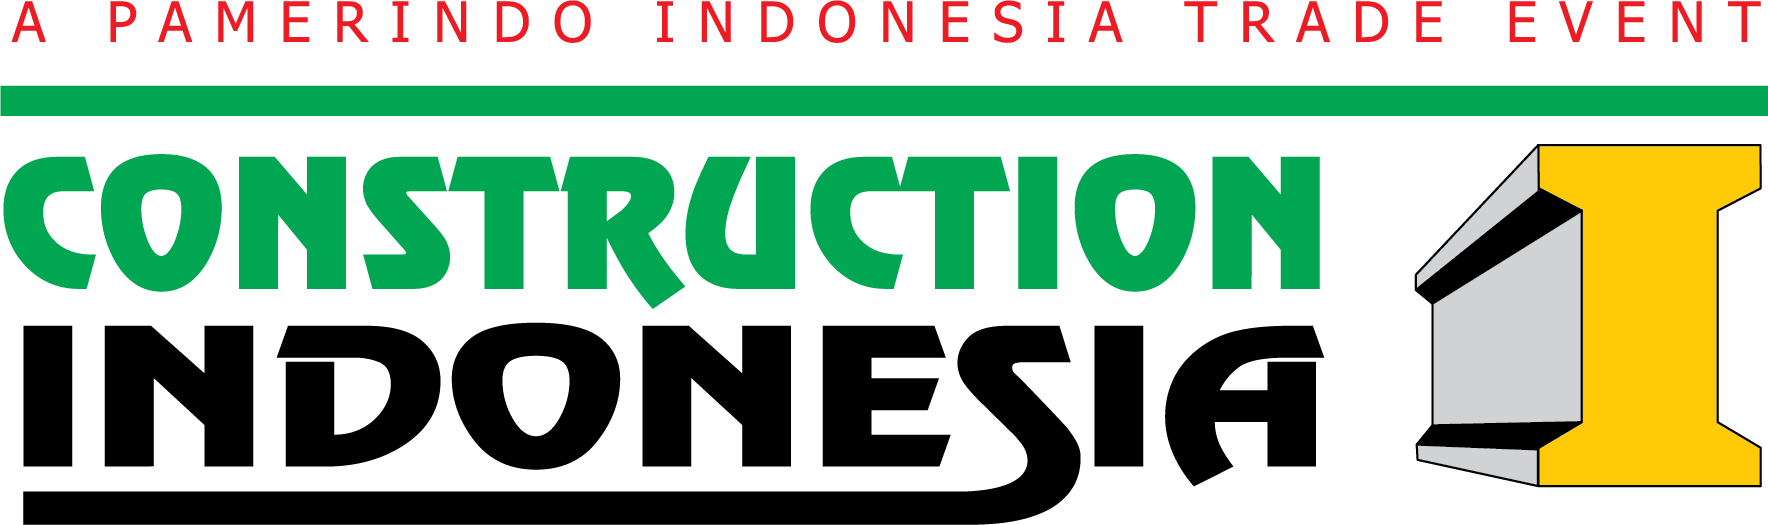 Mining Indonesia logo_2